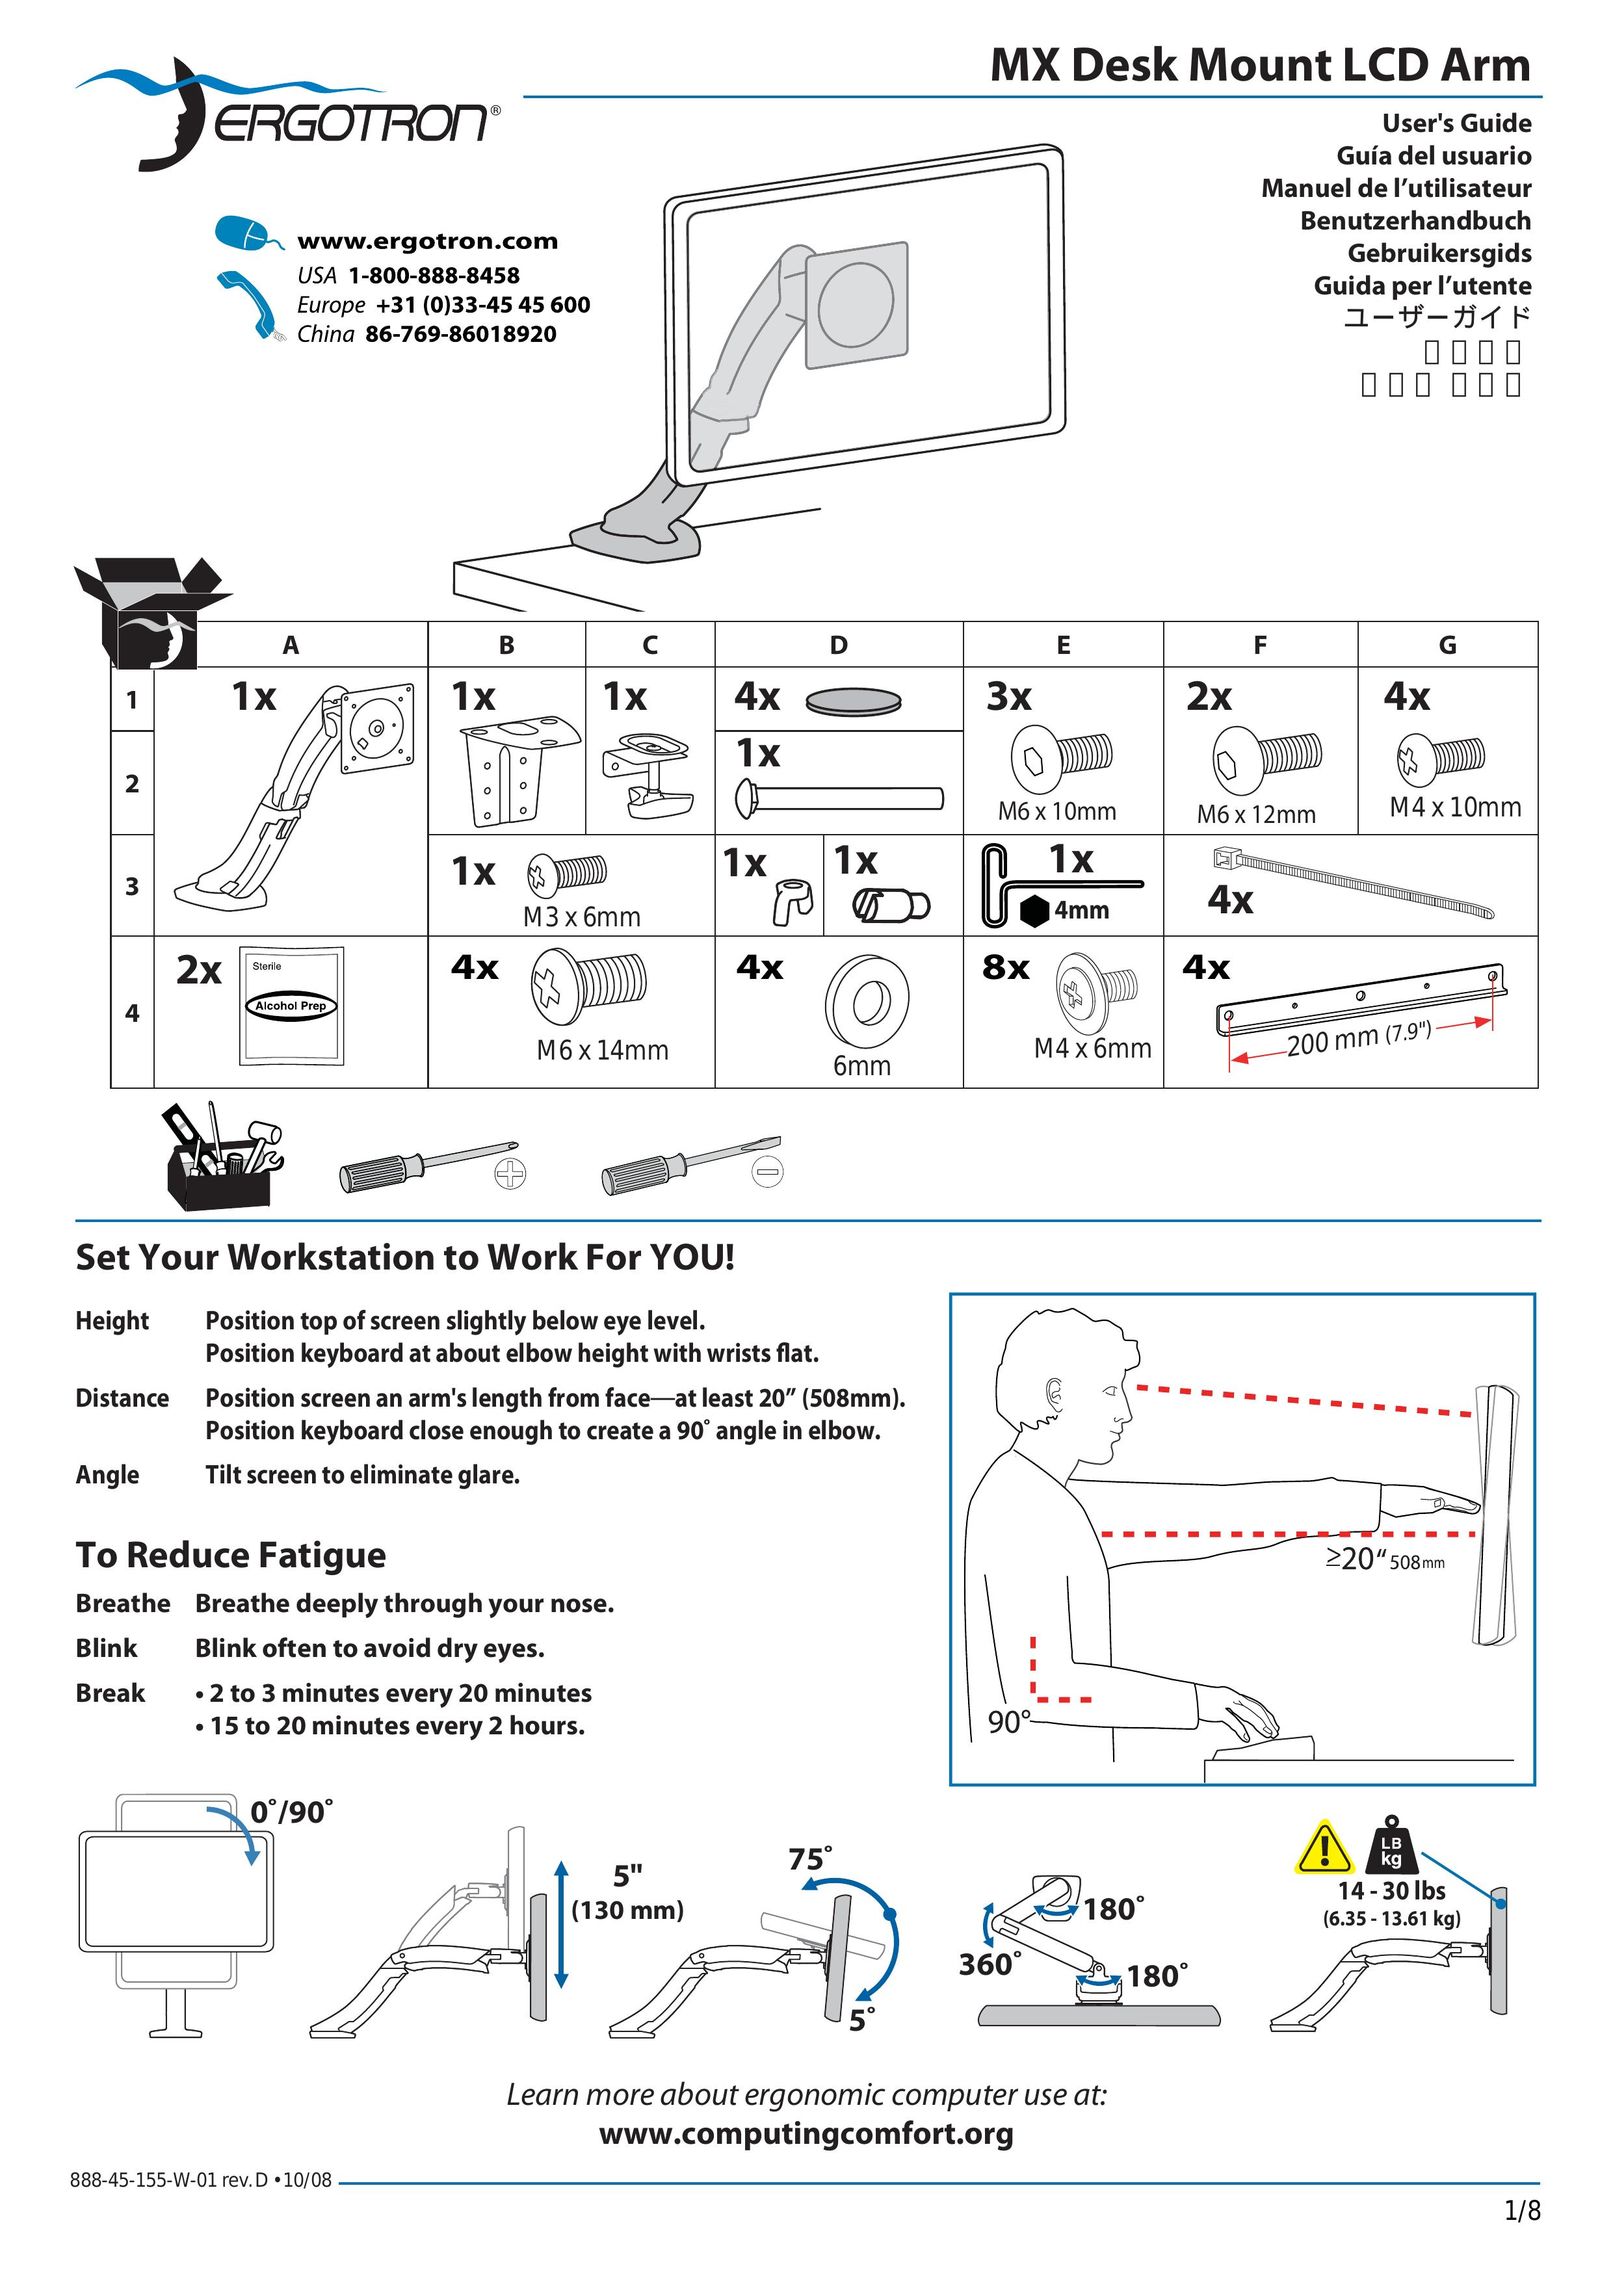 Ergotron Desk Mount LCD Arm Indoor Furnishings User Manual